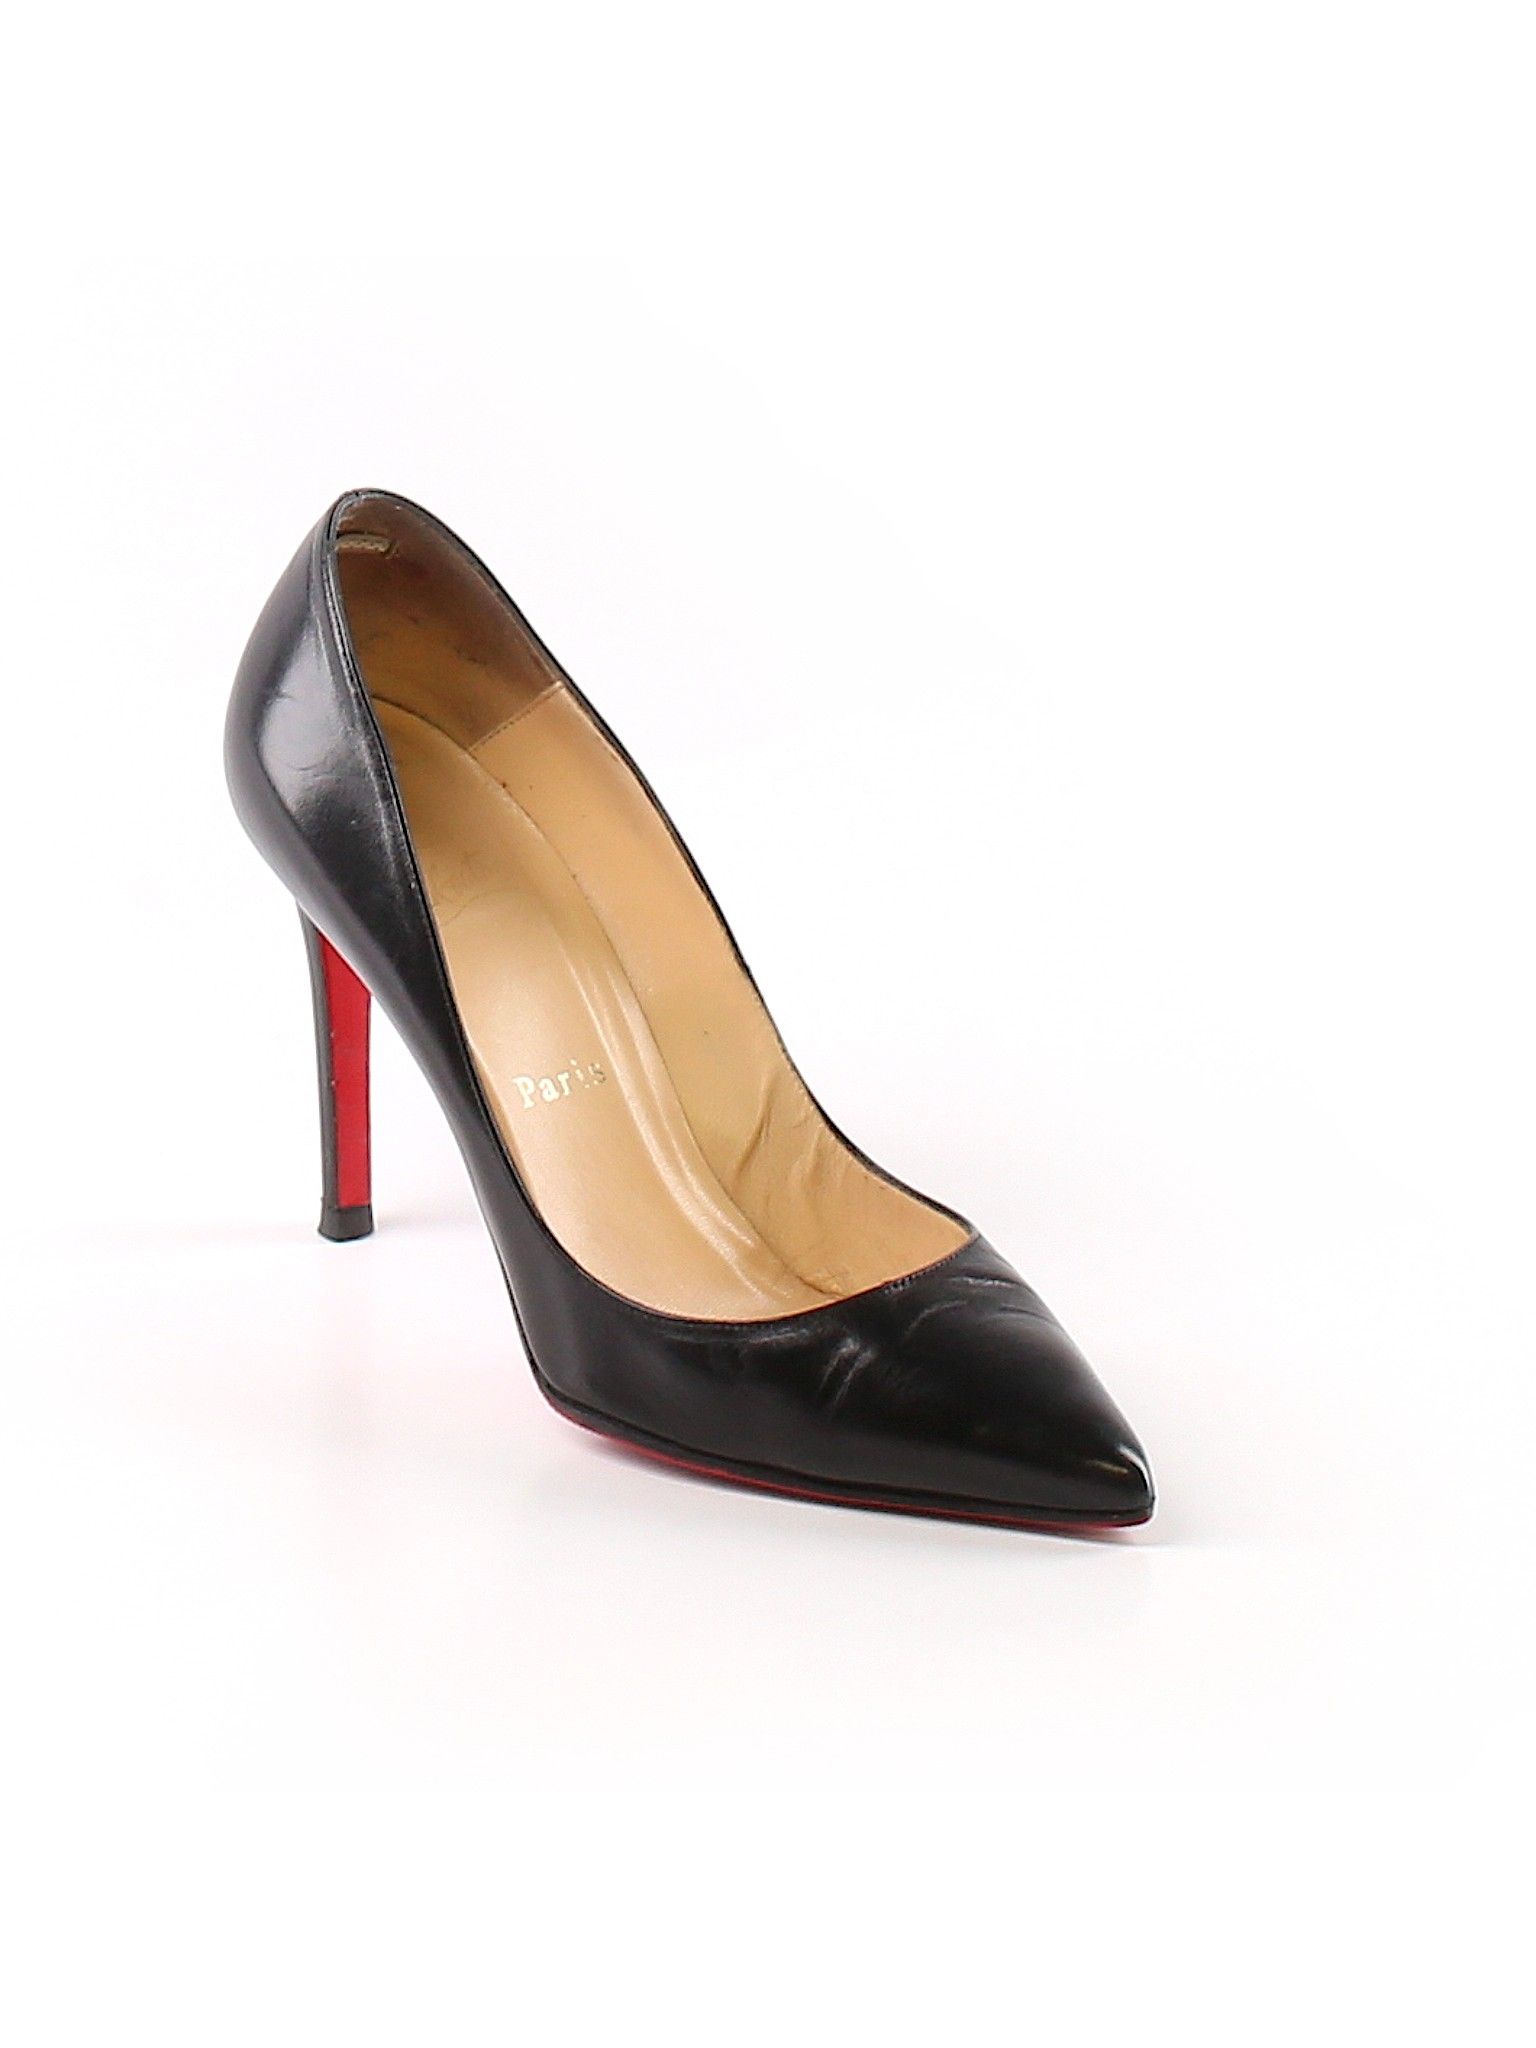 Christian Louboutin Heels Size 7 1/2: Black Women's Clothing - 38602553 | thredUP